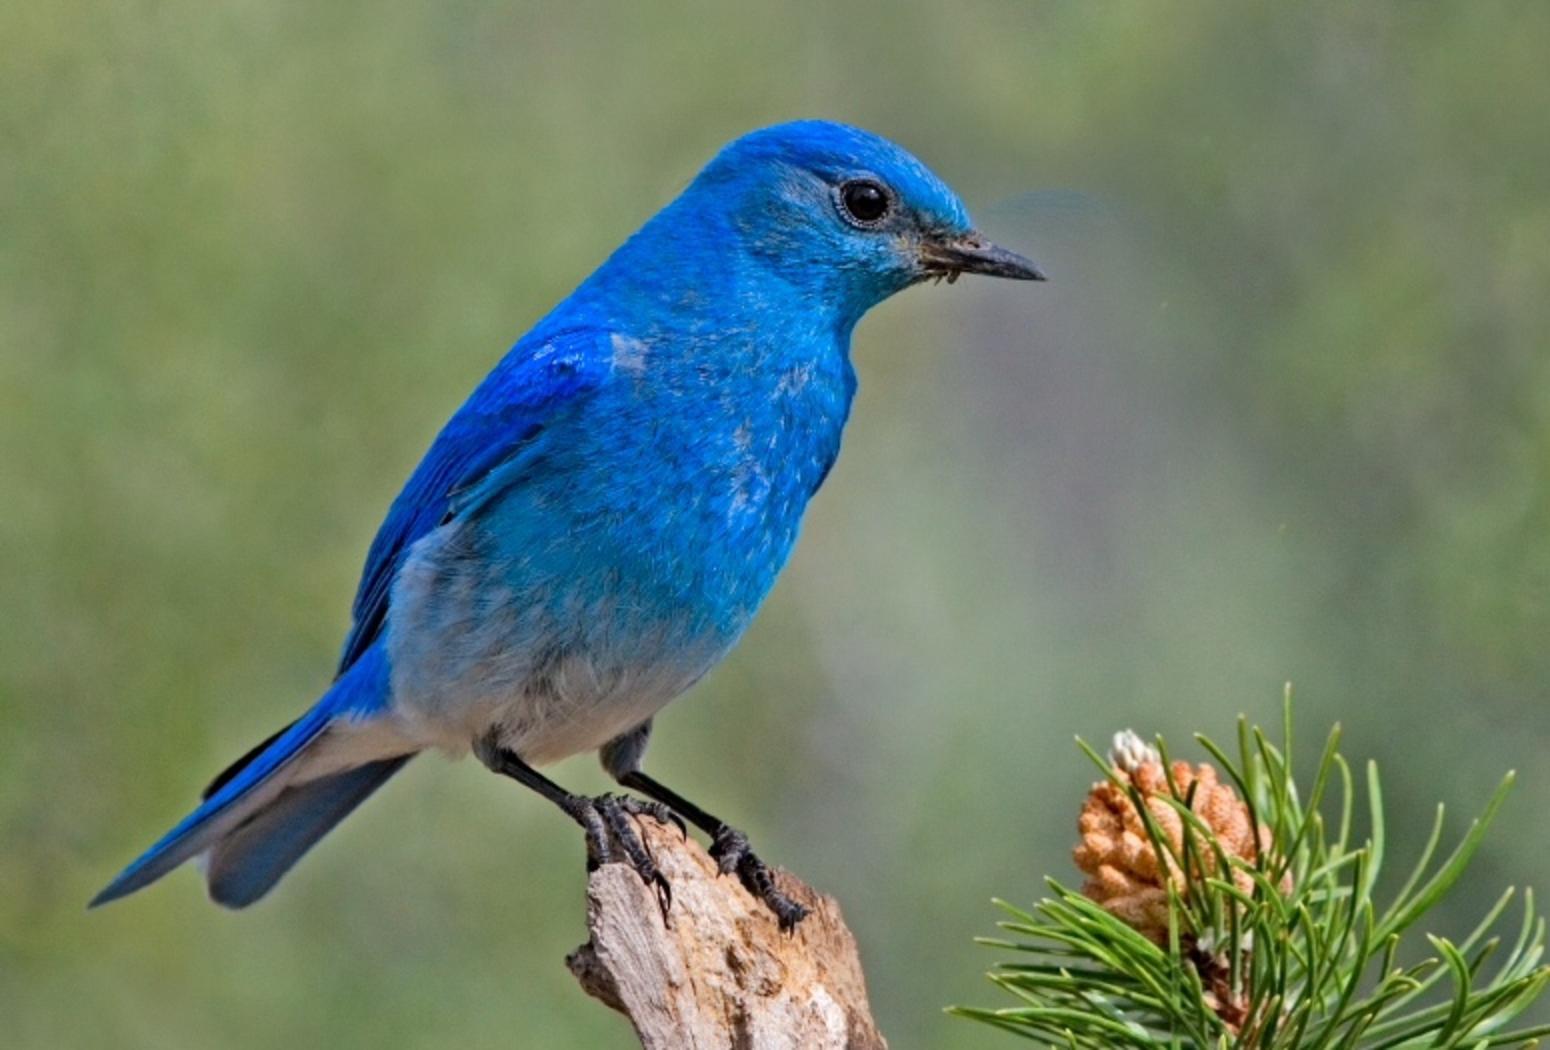 Male mountain bluebird, often seen along rural roads passing through meadows. Photo courtesy Wikipedia/Linda Tanner